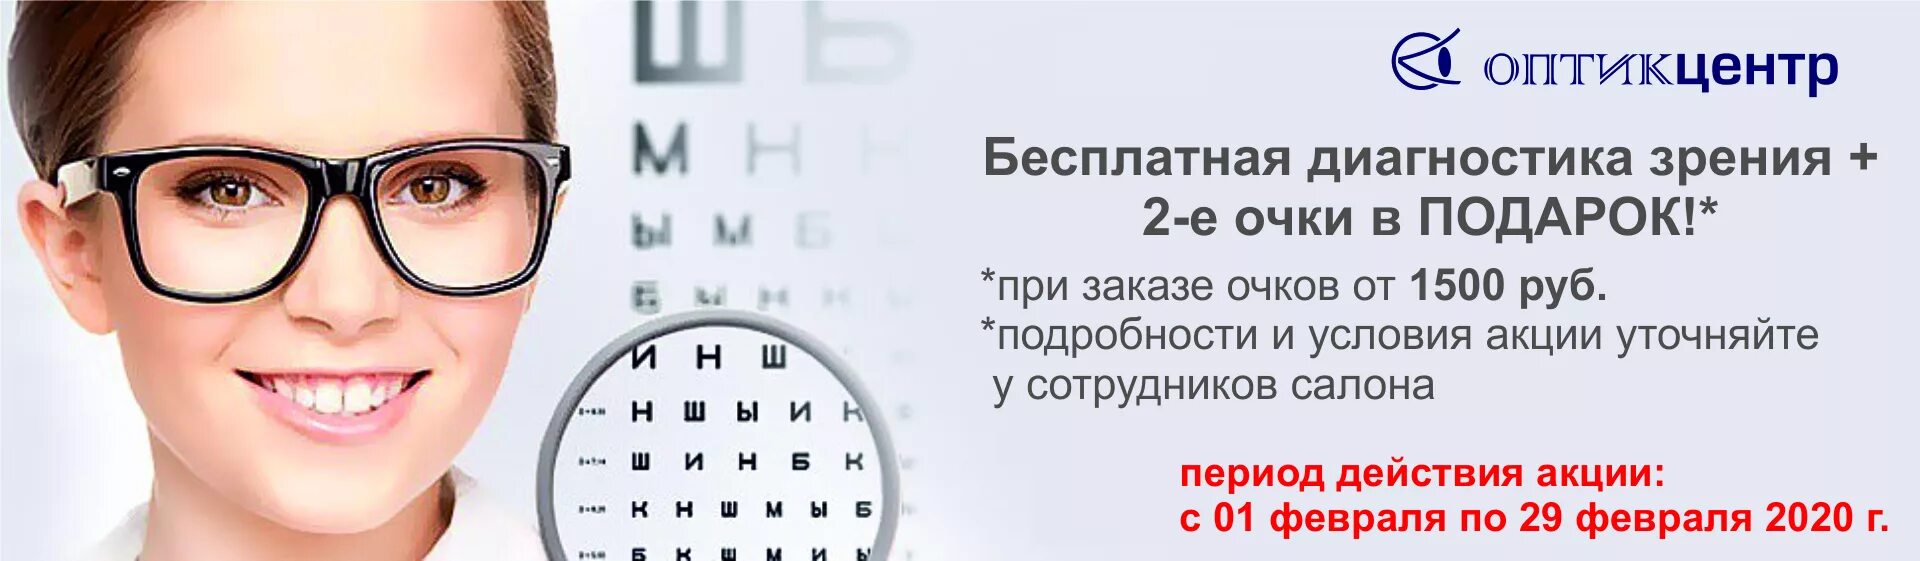 Зрение казань точки. Проверка зрения реклама. Очки для зрения баннер. Реклама очков для зрения. Очки офтальмолога.